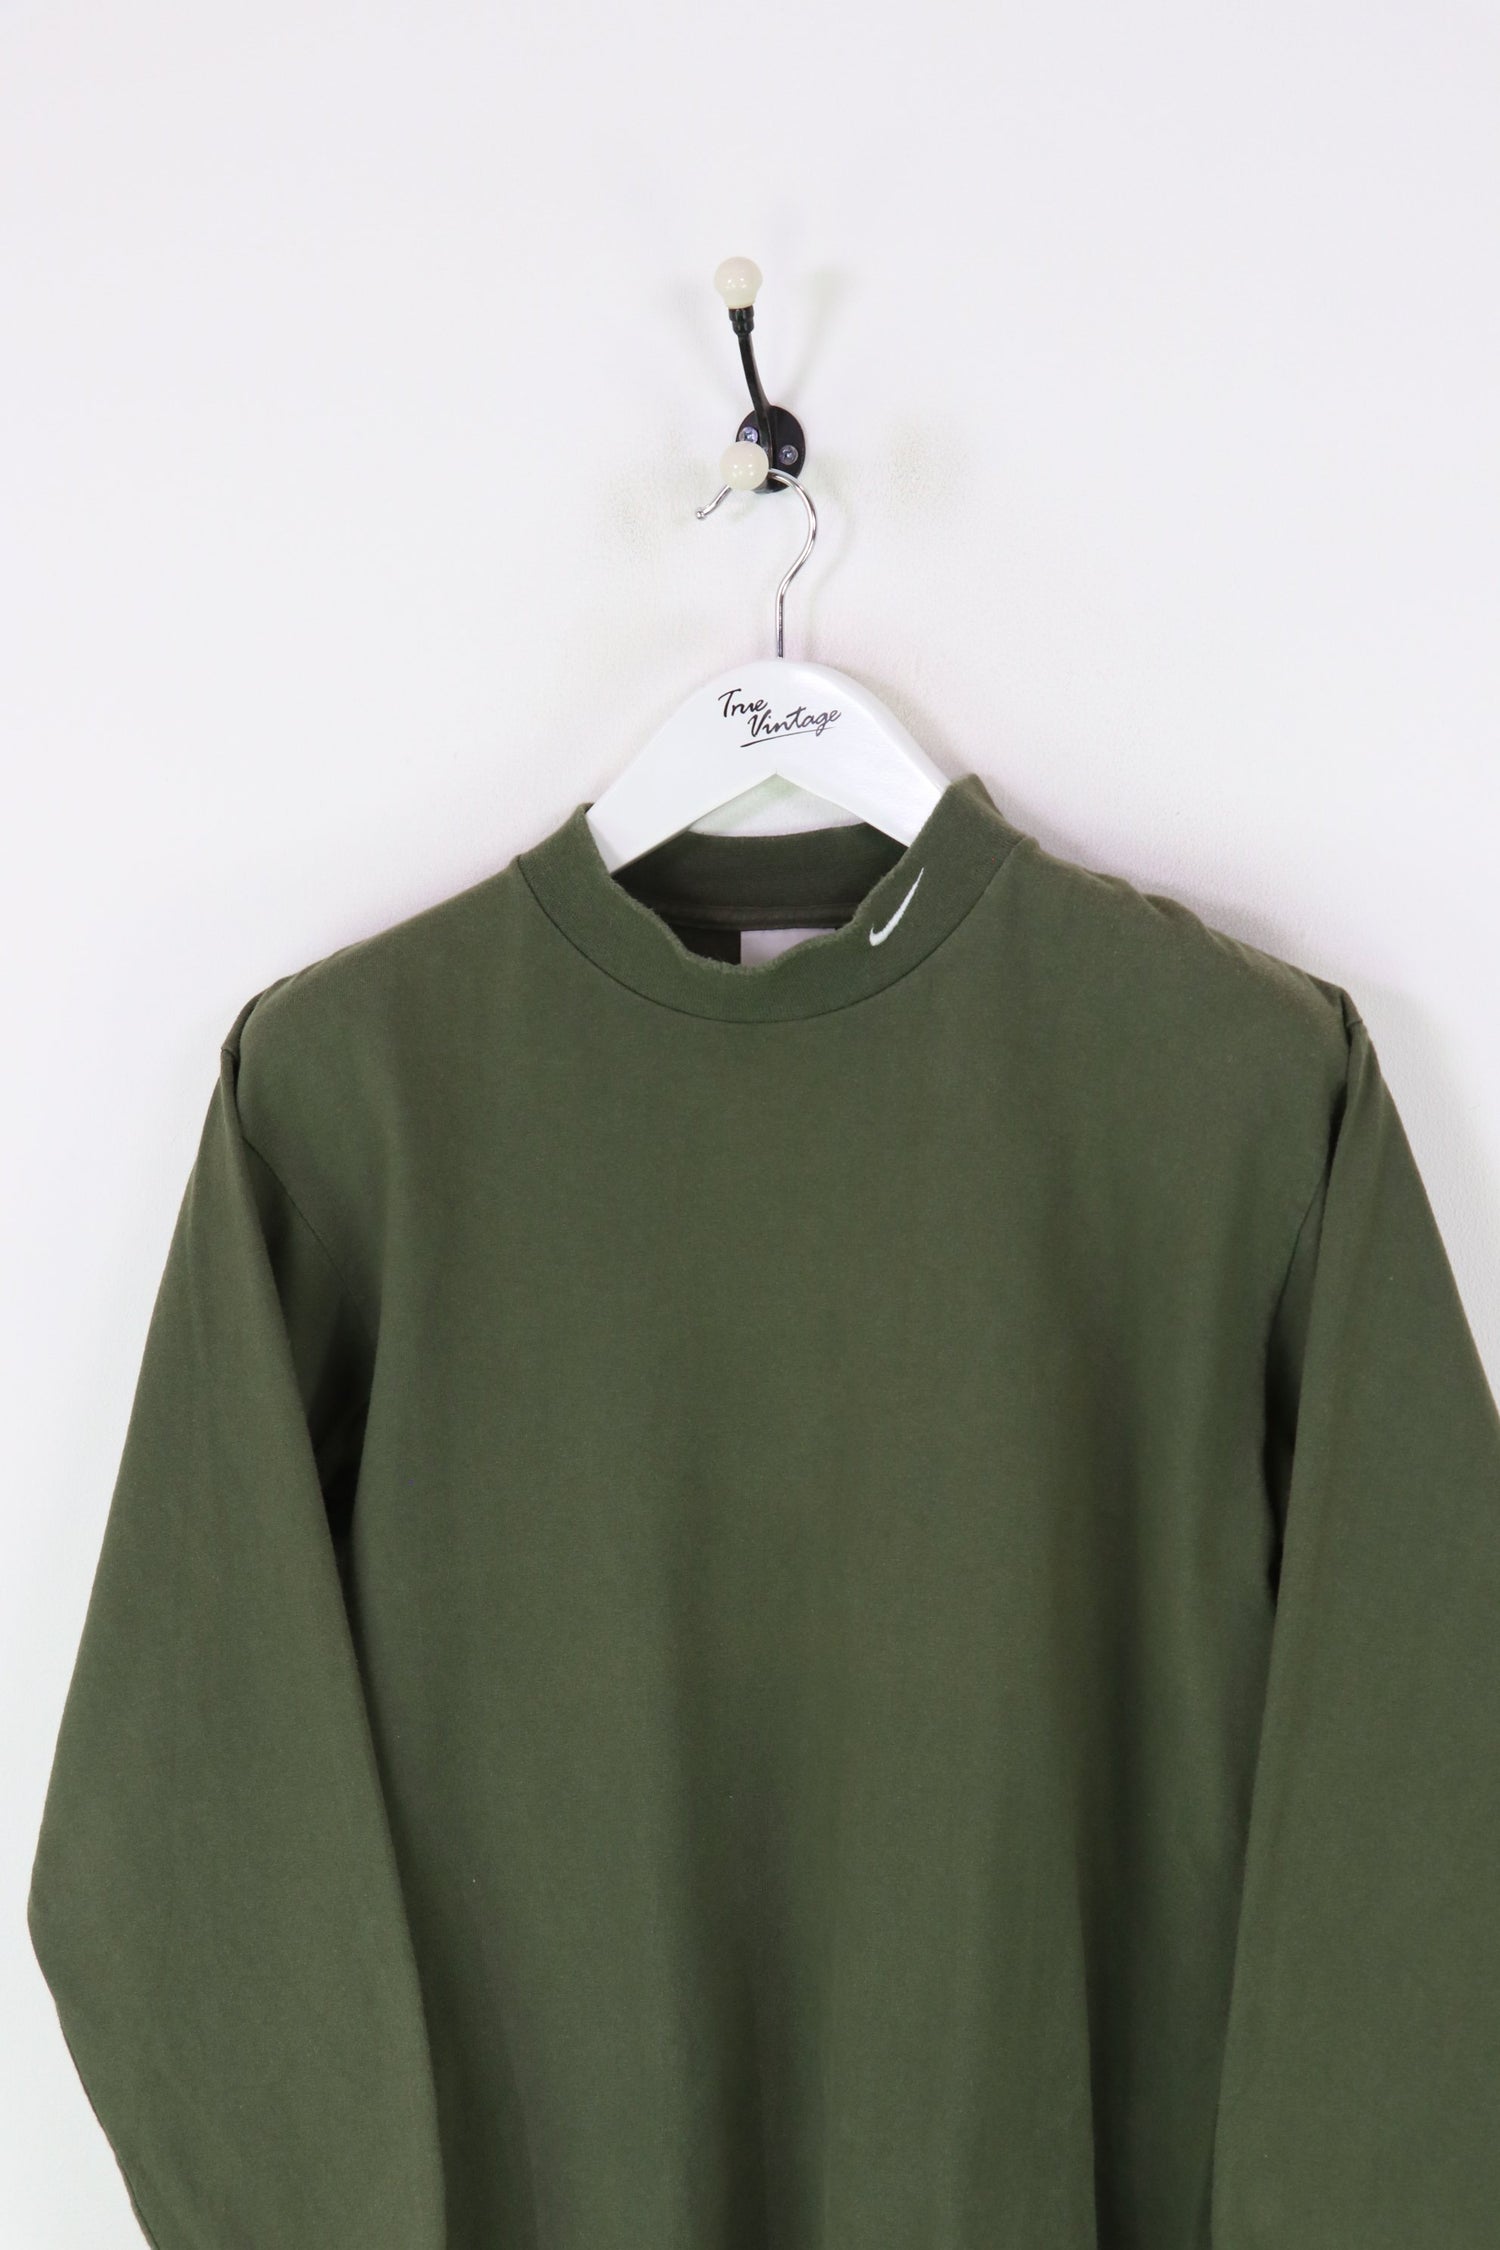 Nike Sweatshirt Green Small